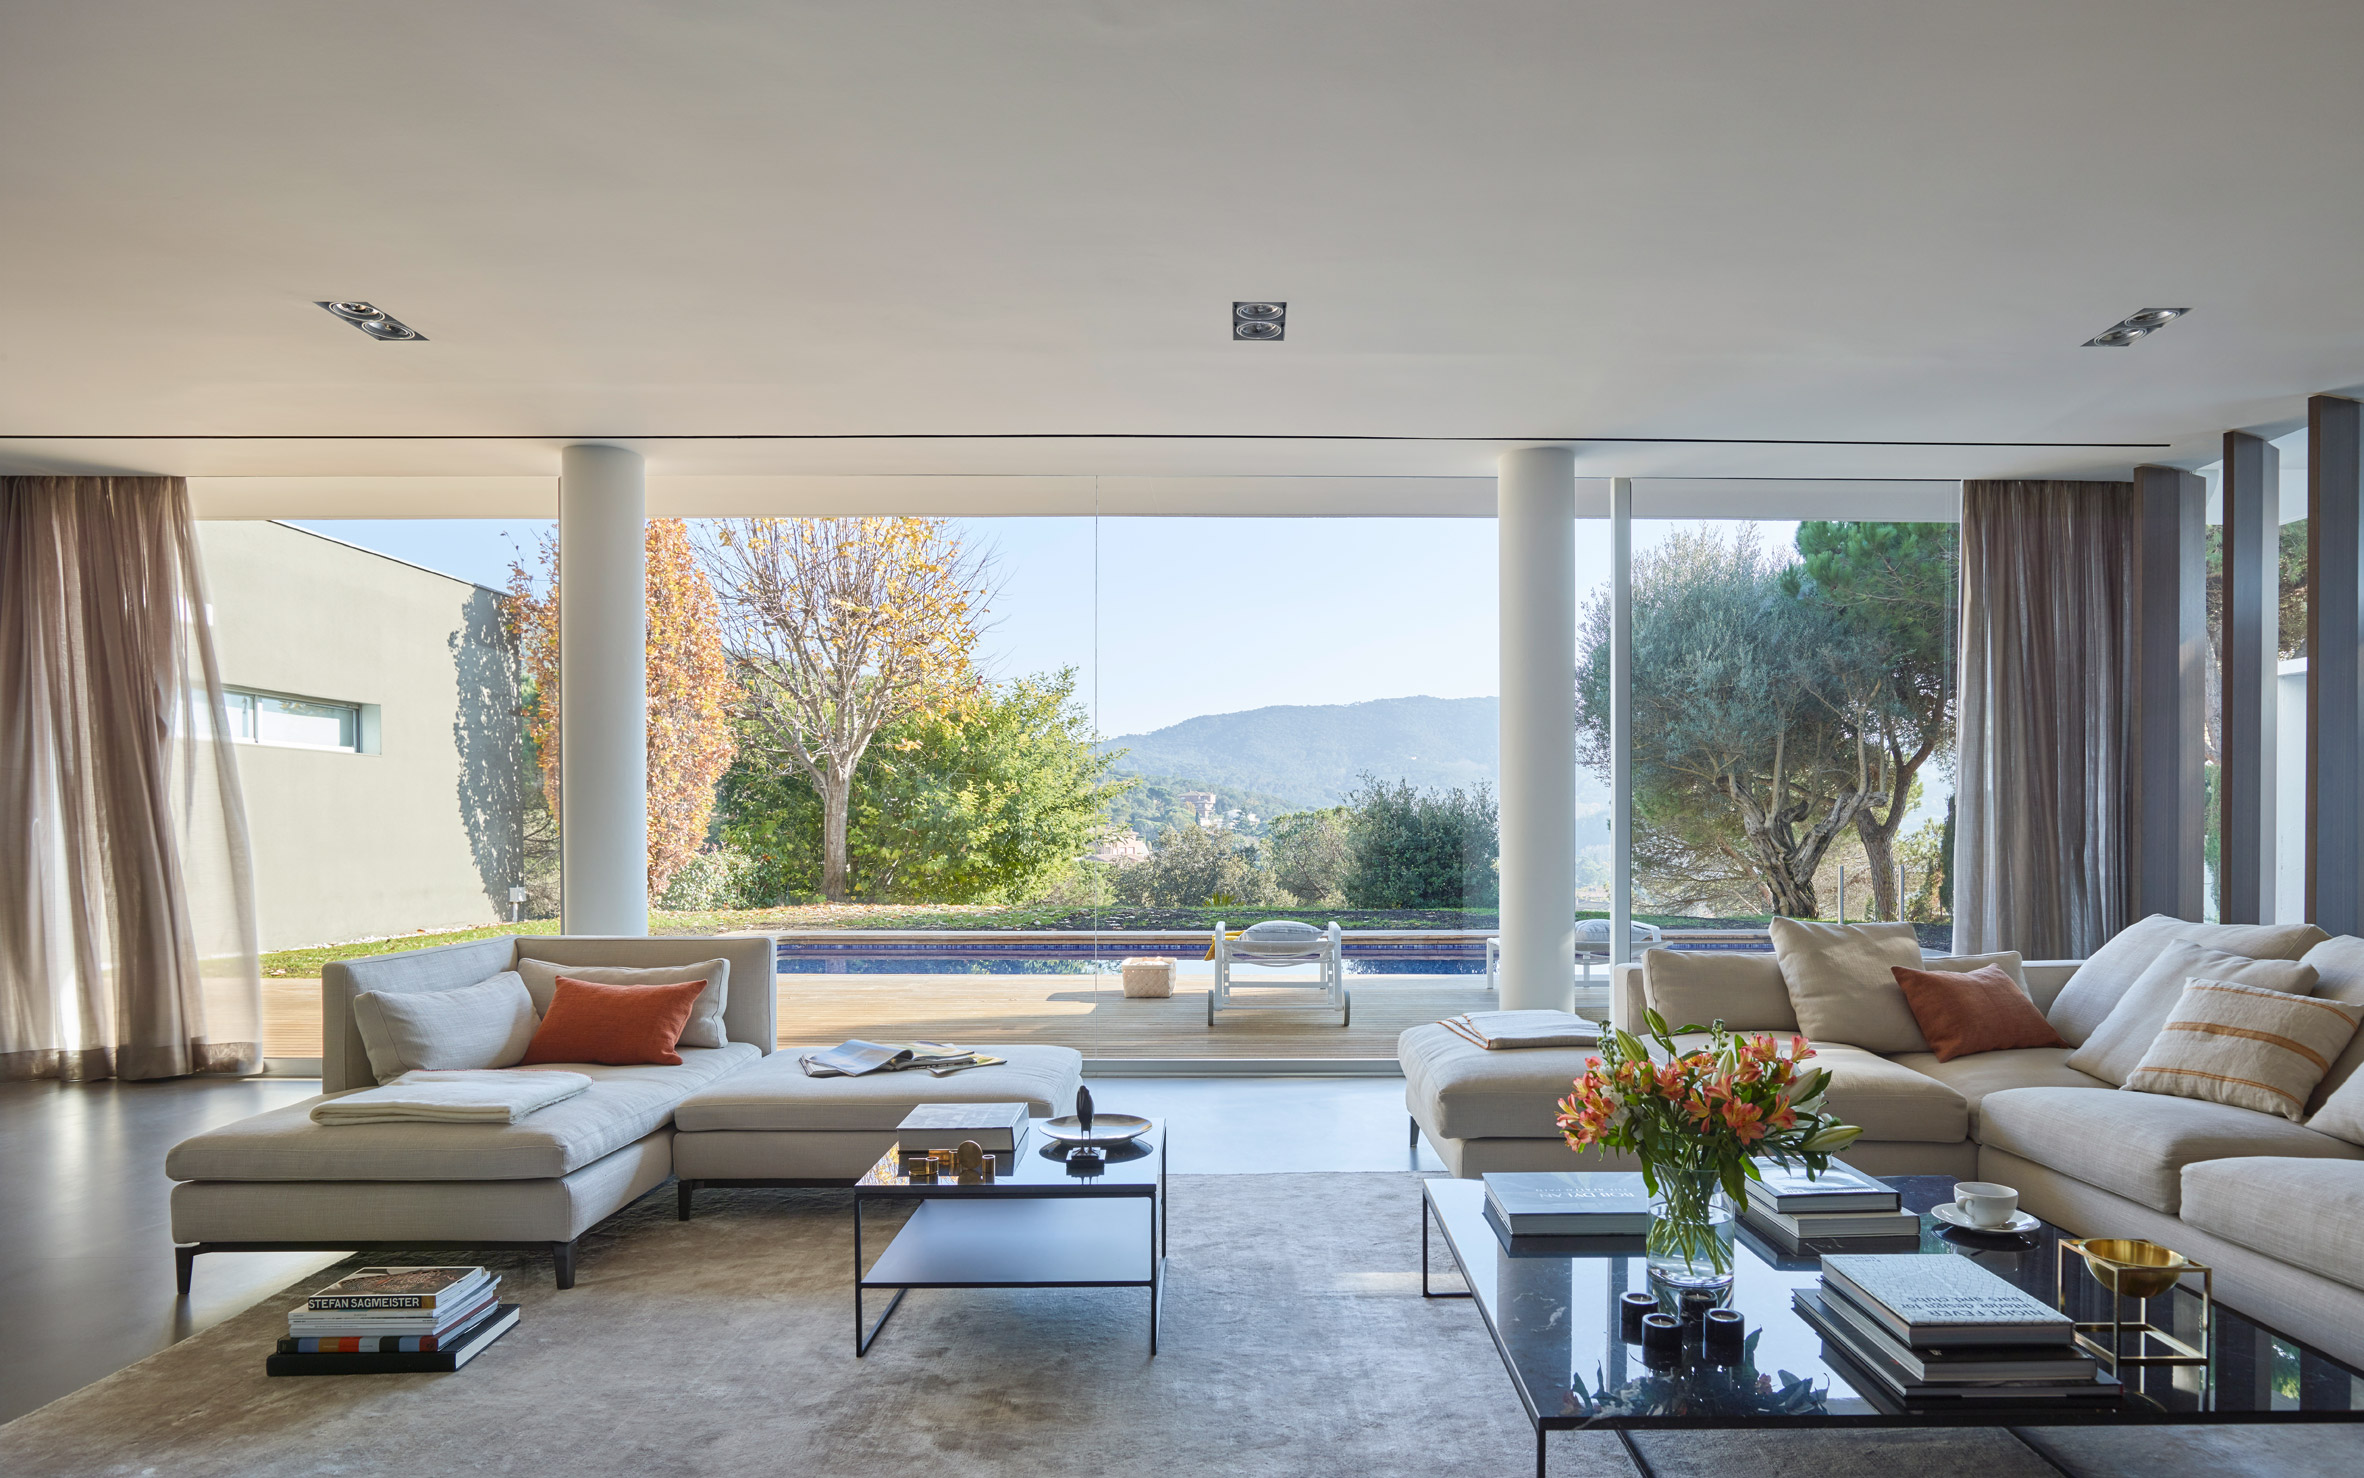 Spanish holiday home by YLAB Arquitectos frames coastal mountain views